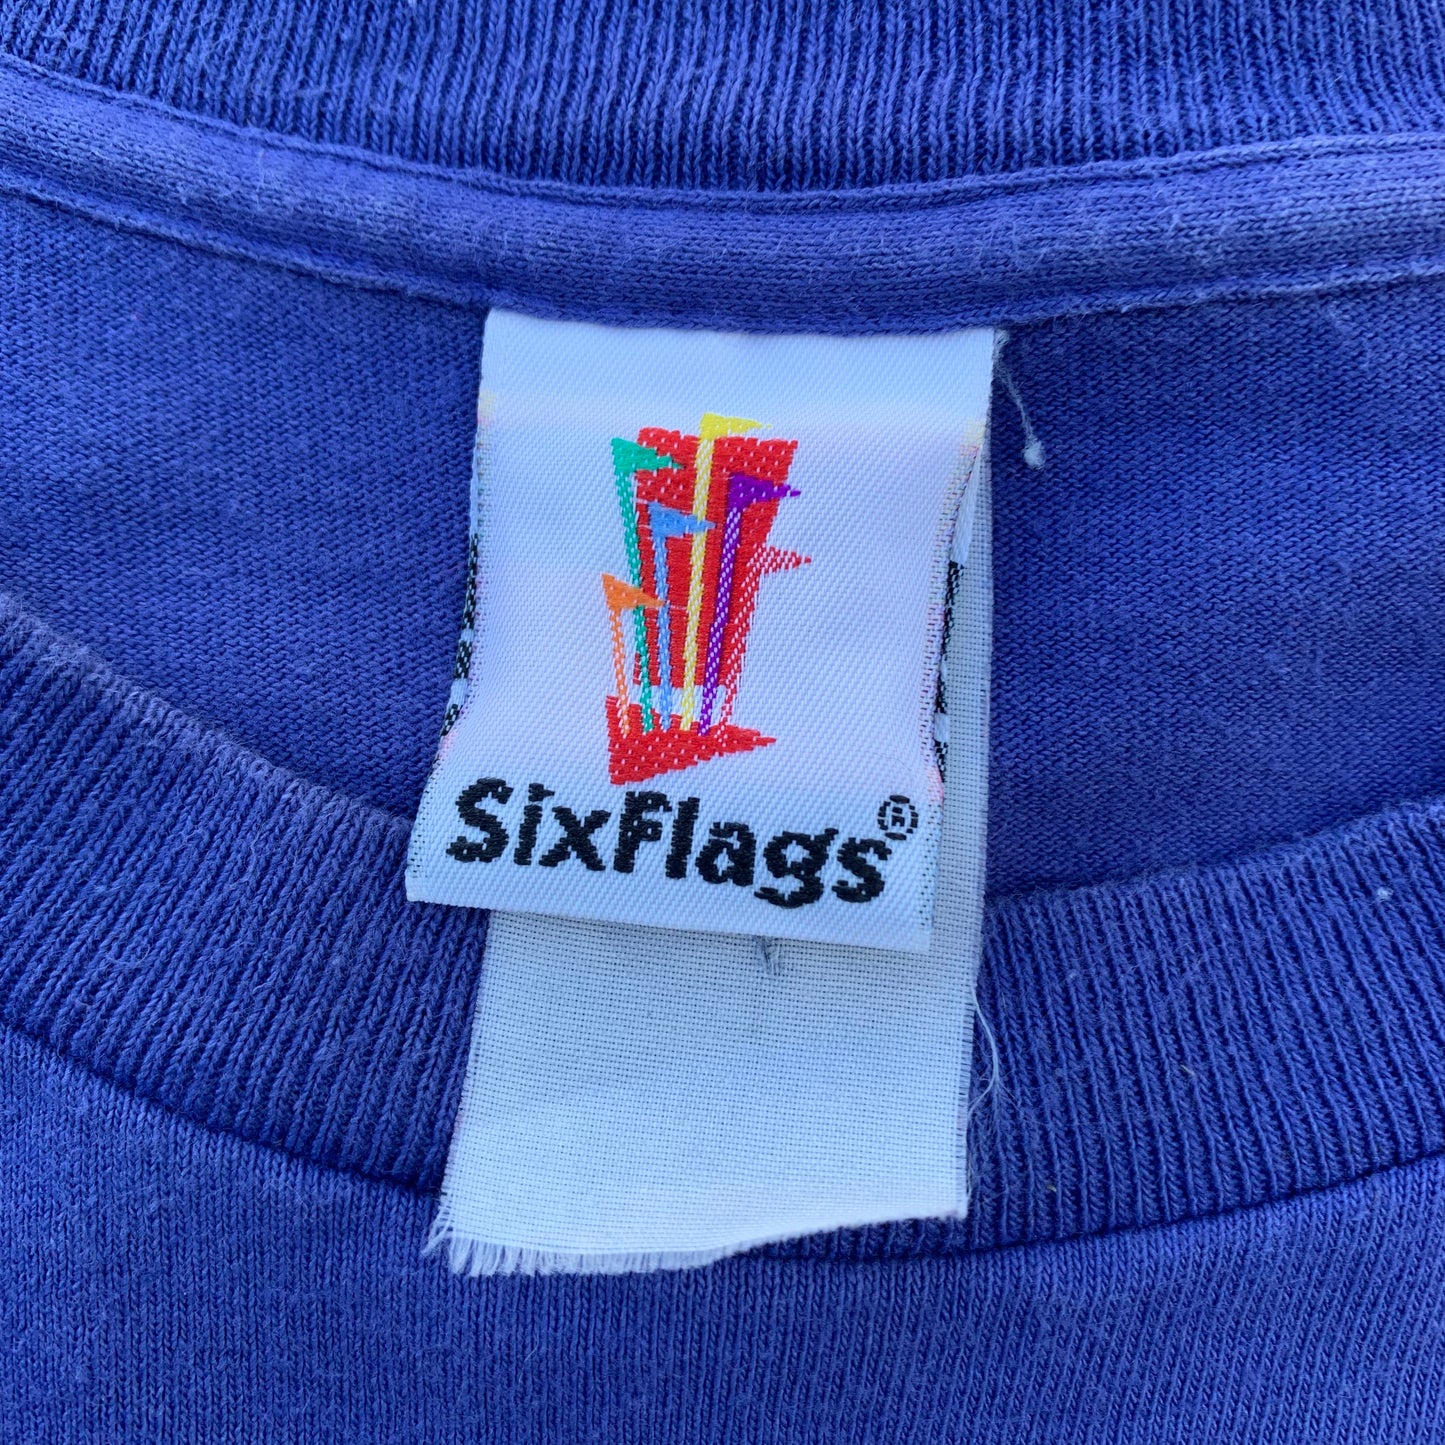 Six Flags Looney Tunes 2000 XL